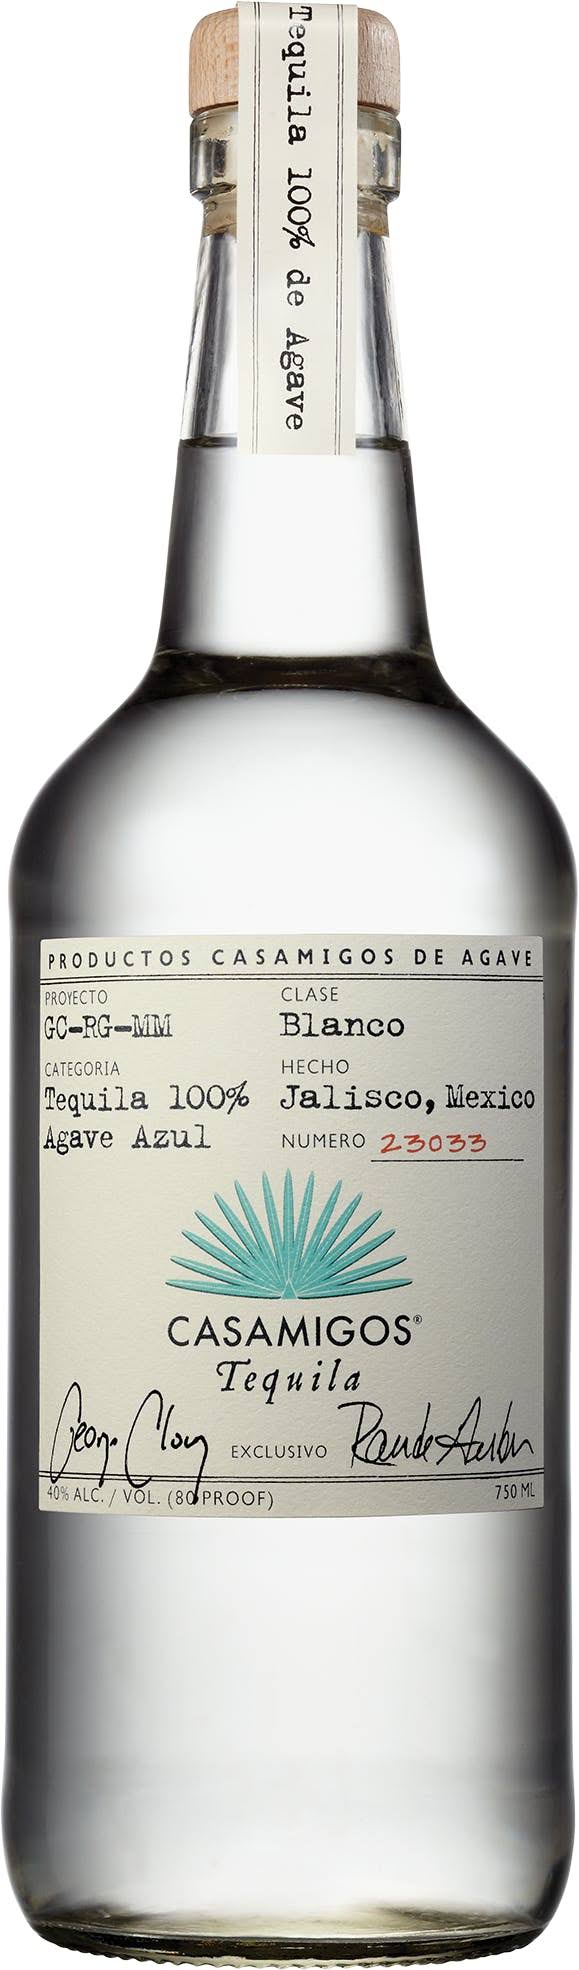 Tequila Casamigos Blanco 40o